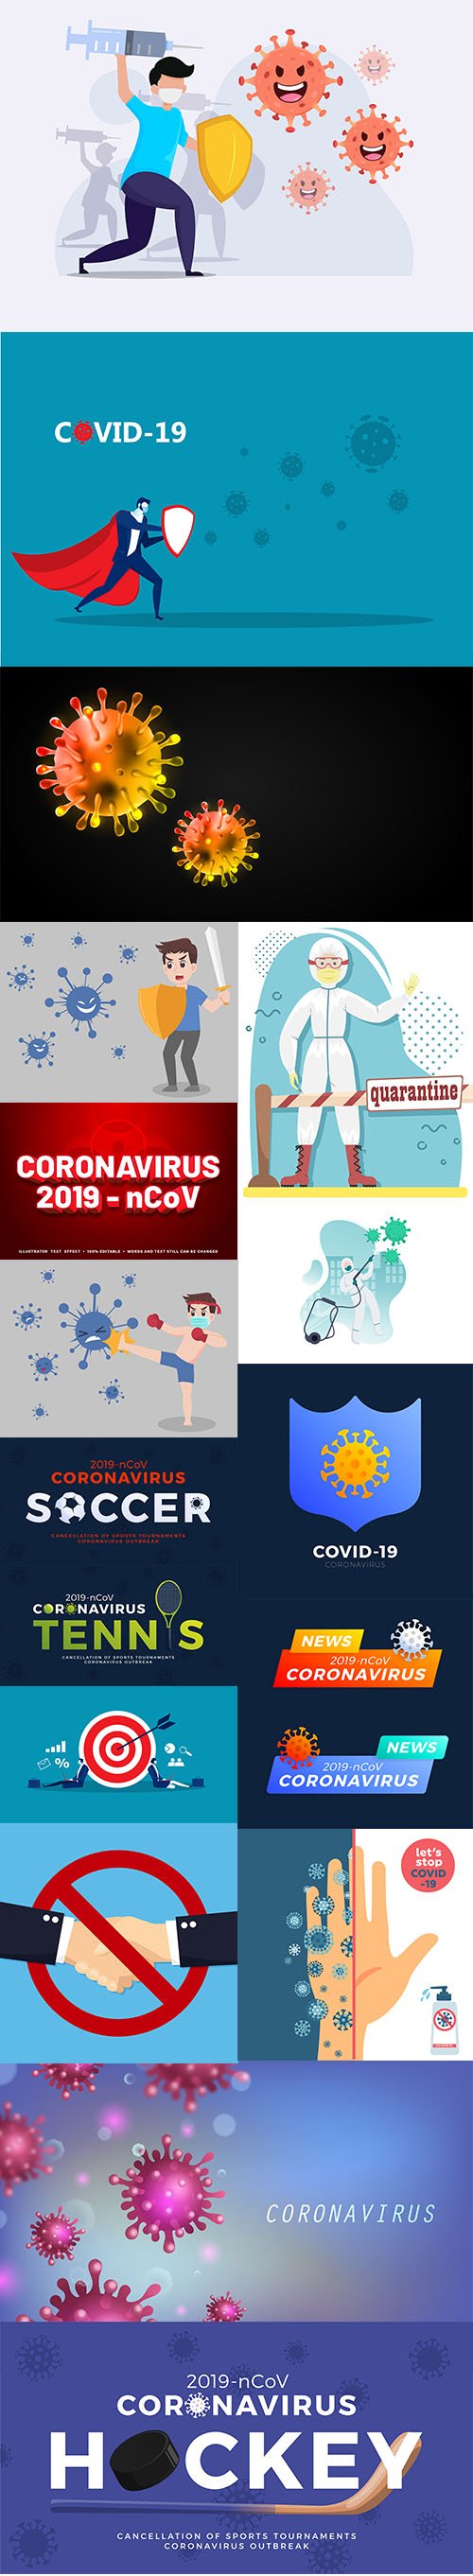 Coronavirus Covid-19 Virus Big Illustration Pack Vol 2